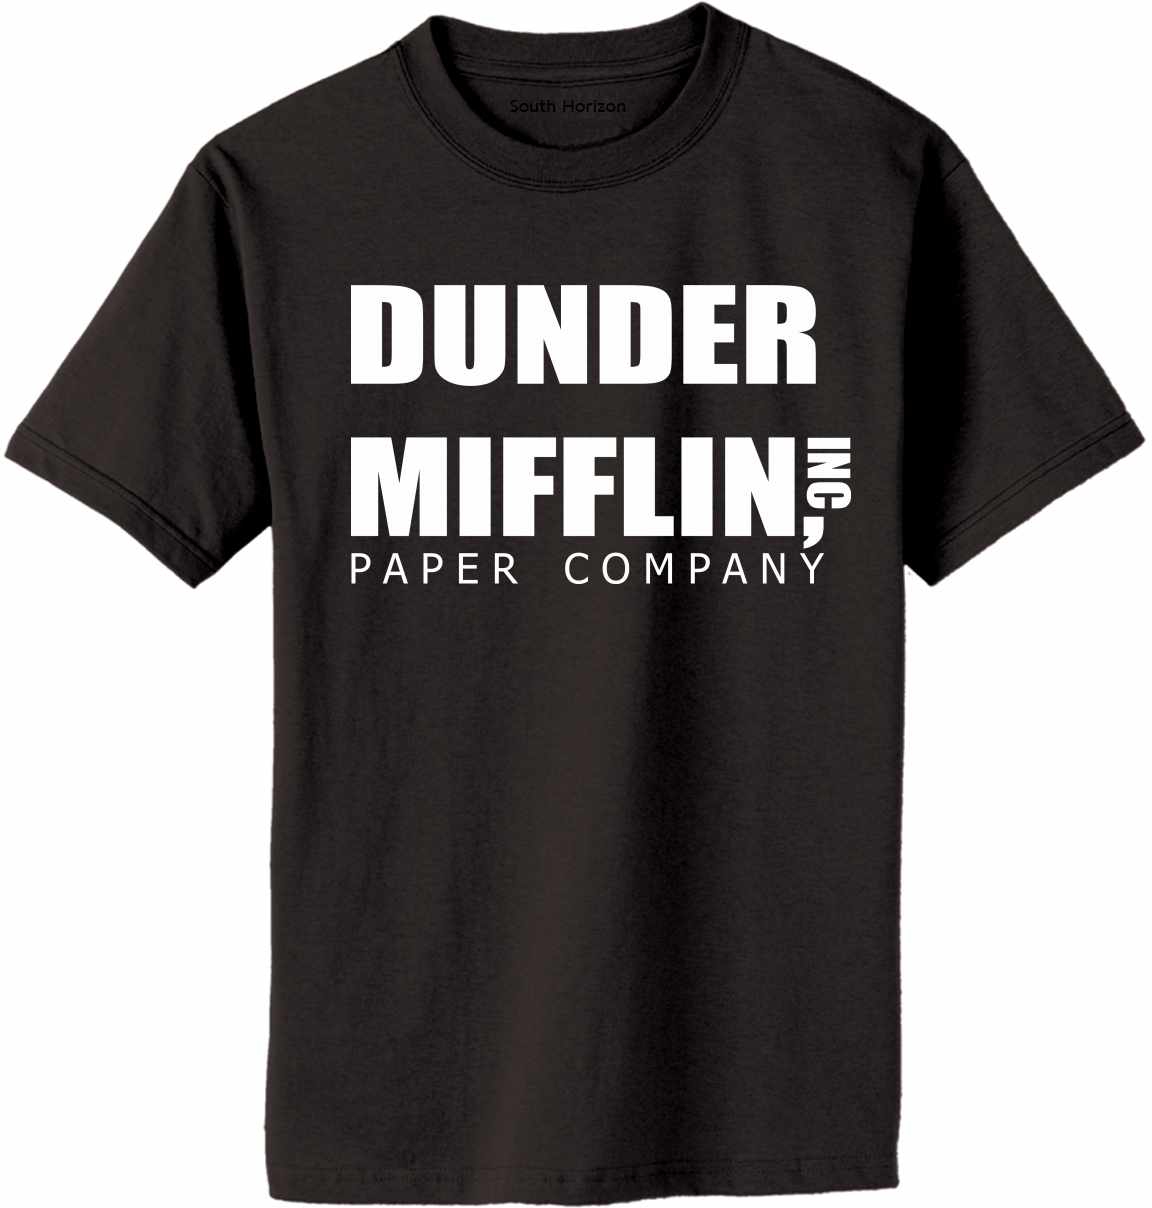 DUNDER MIFFLIN PAPER COMPANY Adult T-Shirt